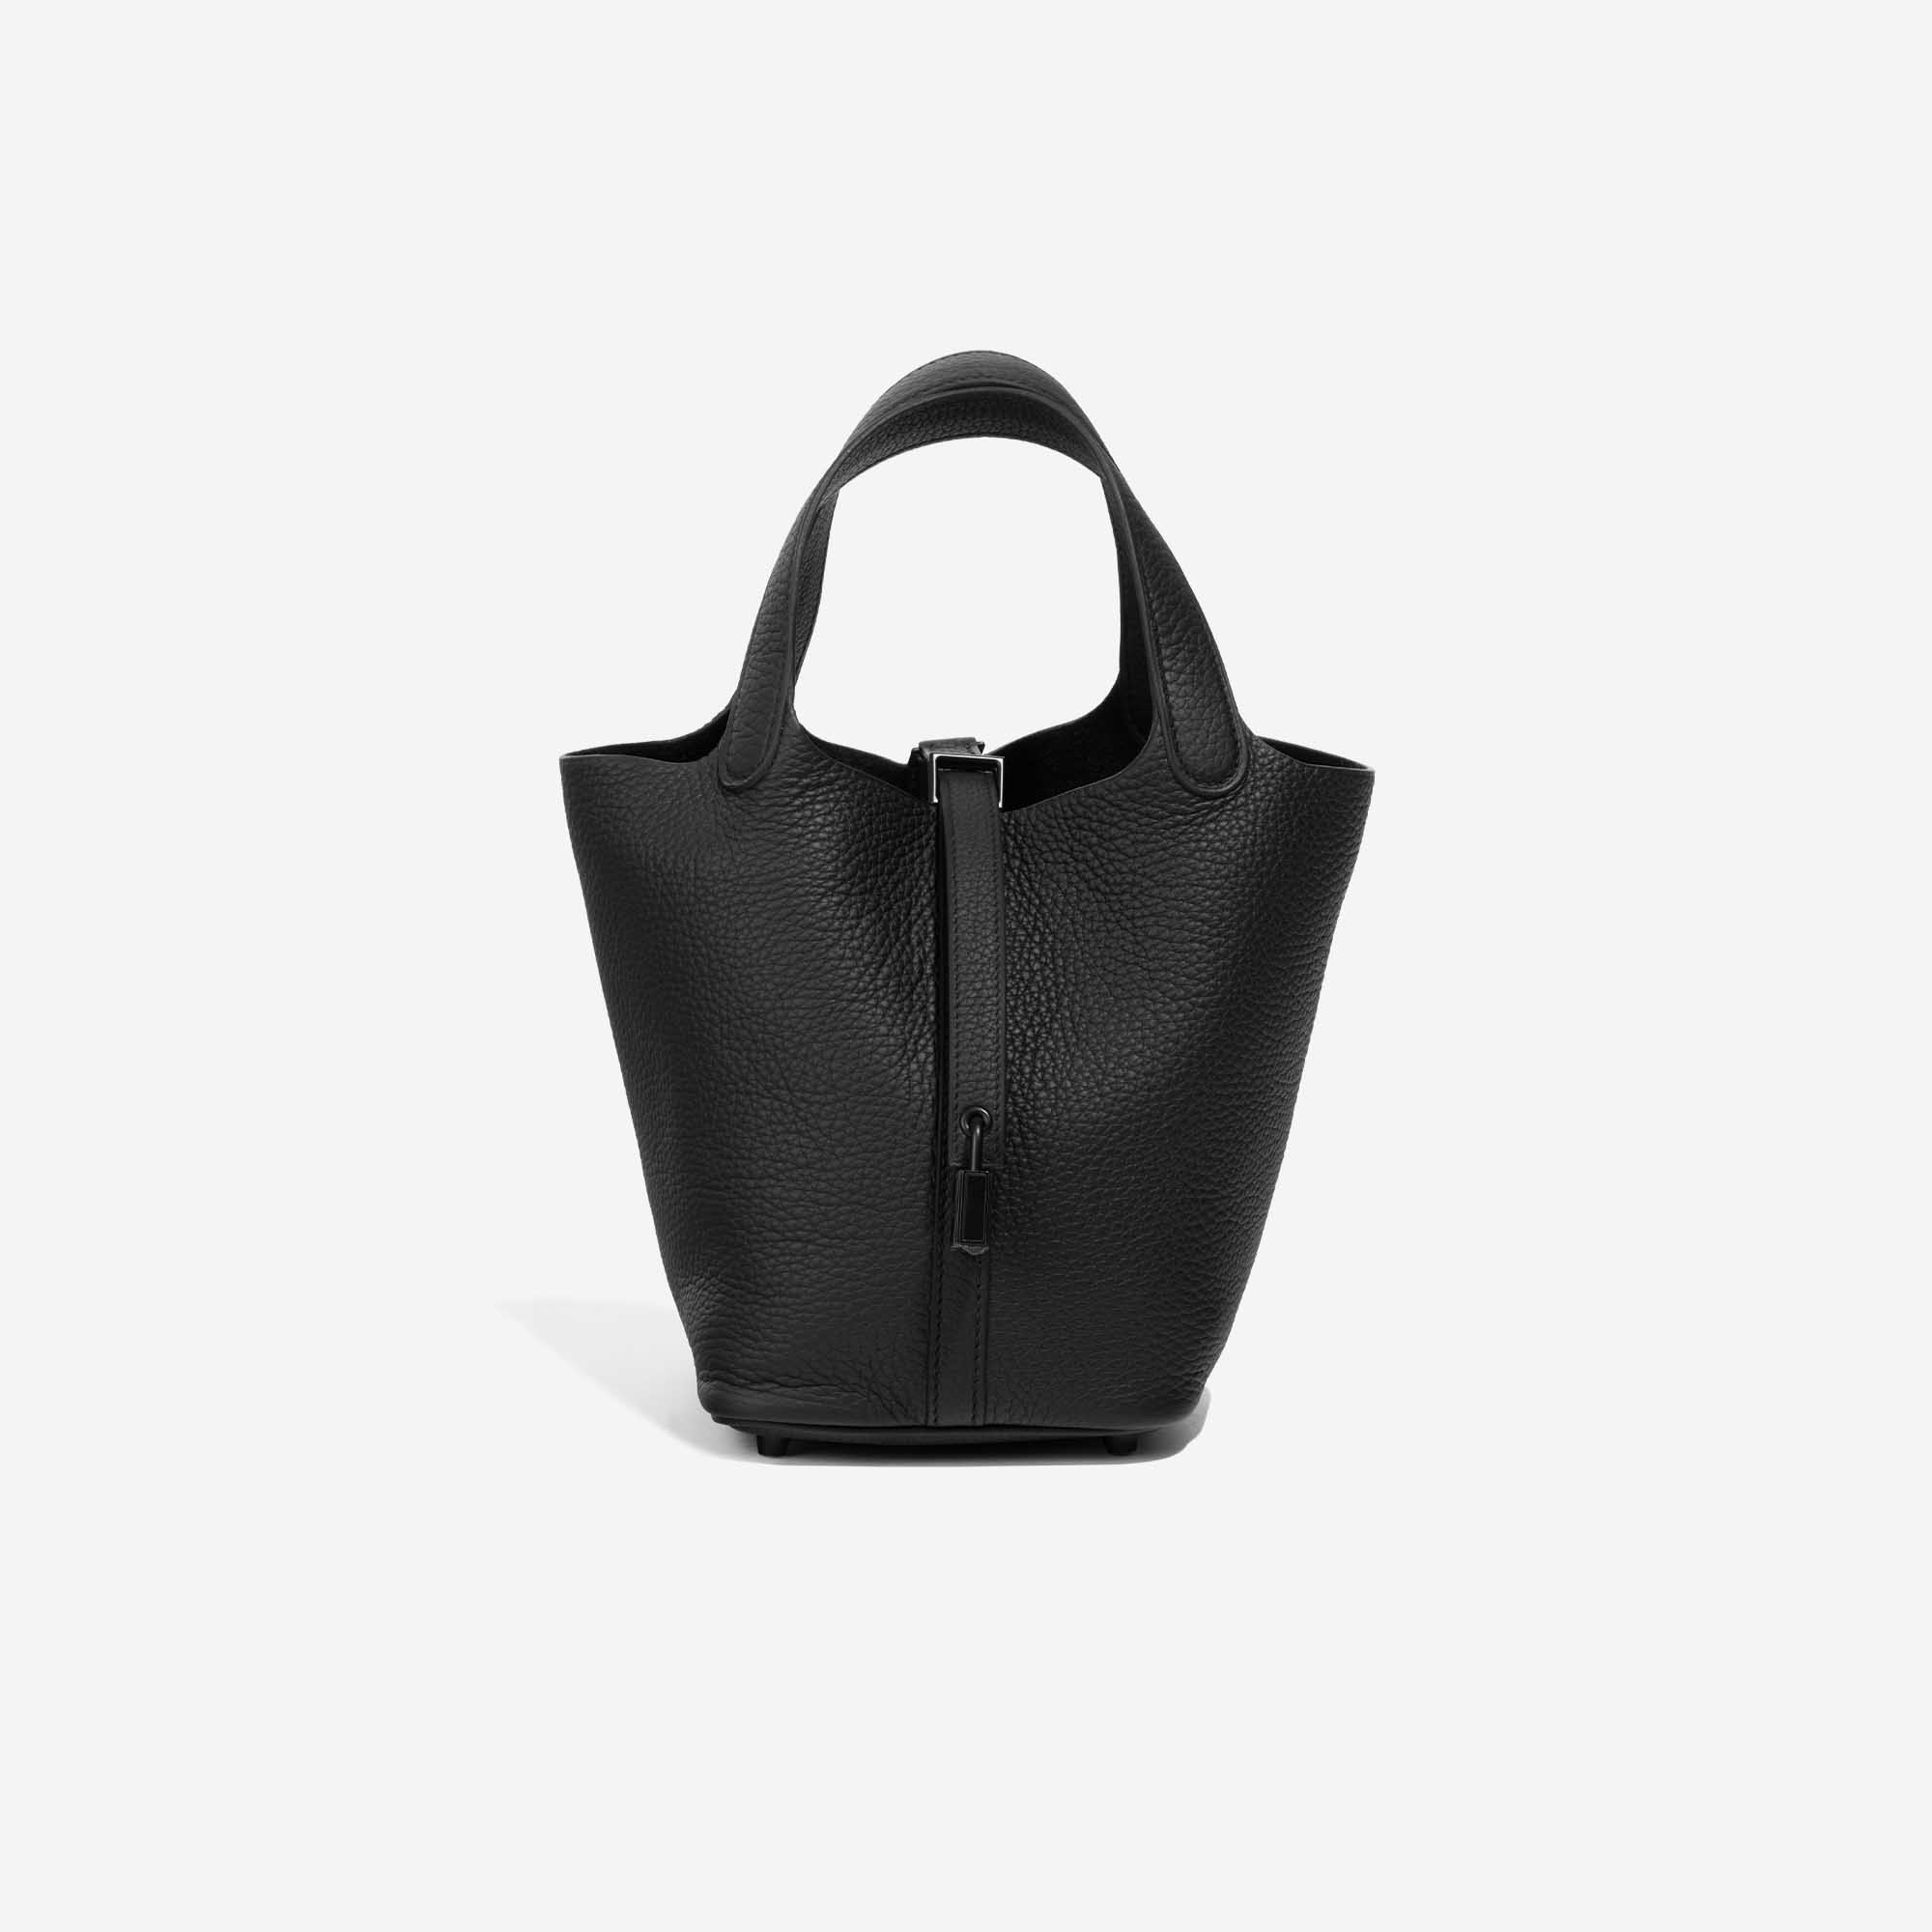 Pre-owned Hermès bag Picotin 18 Clemence So Black Black Front | Sell your designer bag on Saclab.com